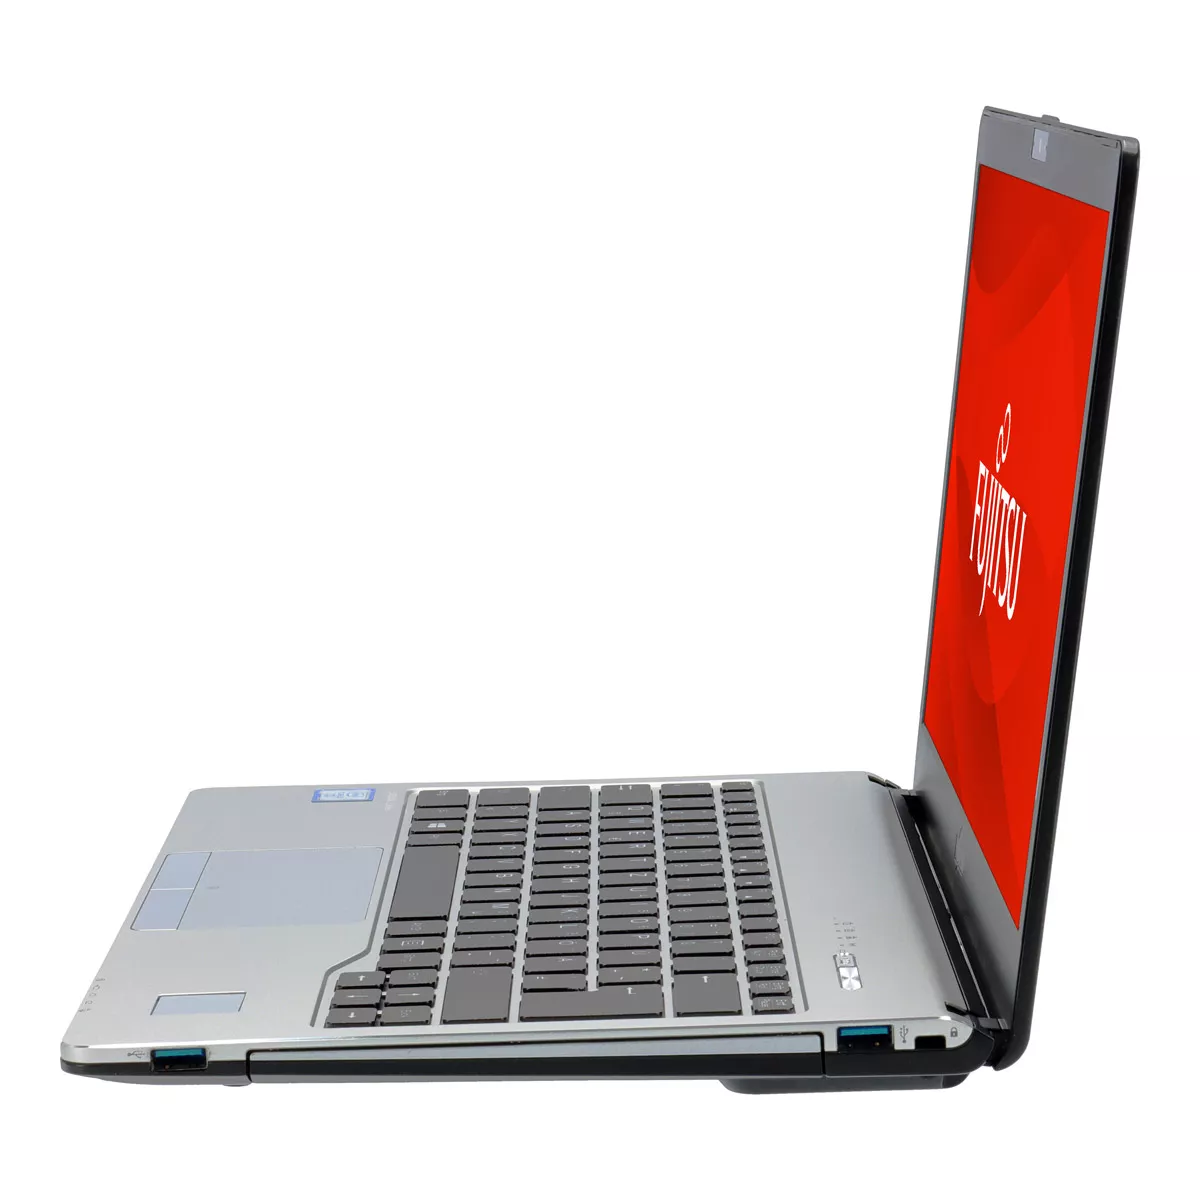 Fujitsu Lifebook S938 Core i5 8250U 240 GB M.2 SSD B